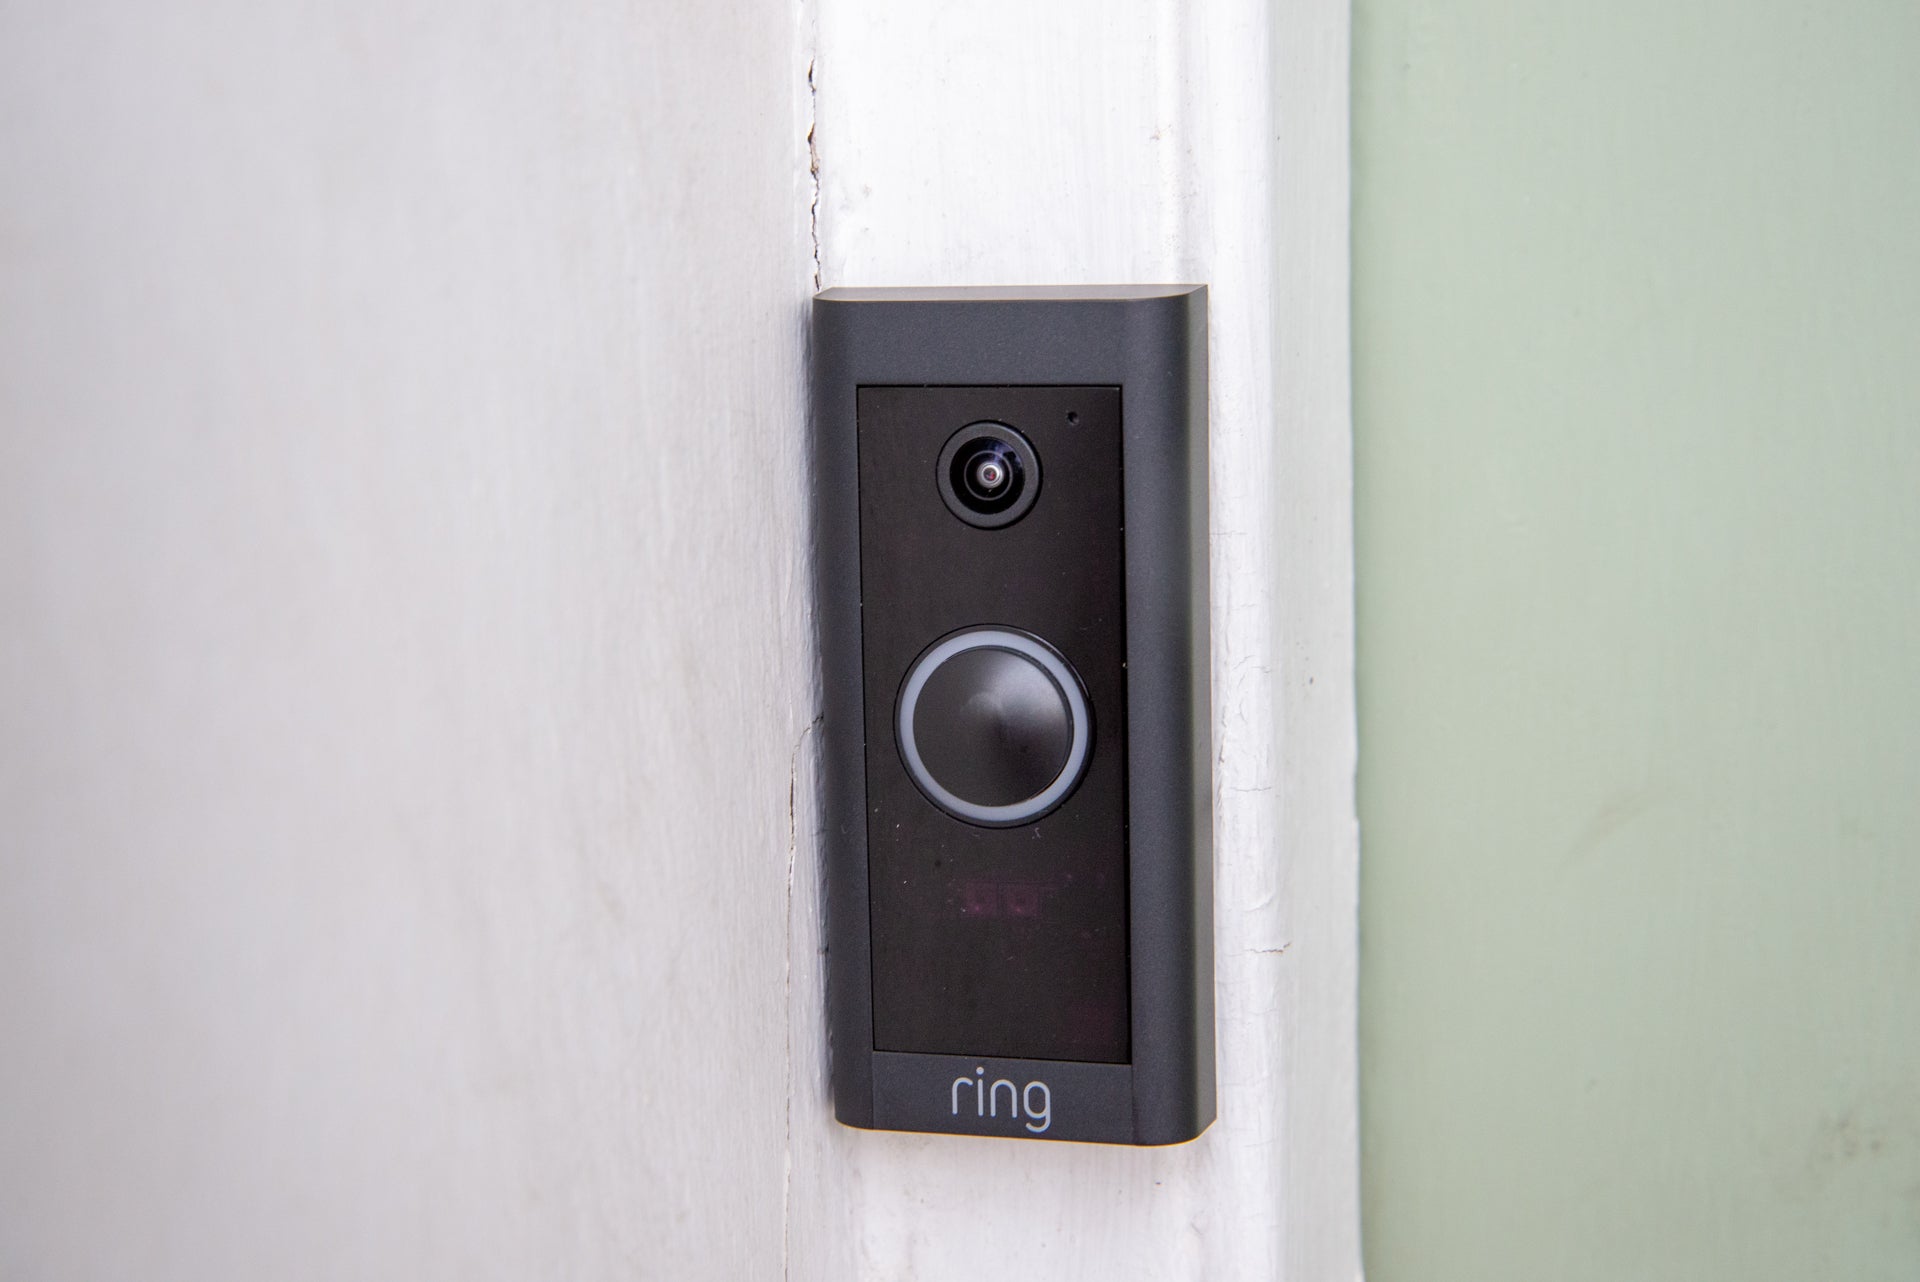 spek Mysterieus Extreem belangrijk Nest vs Ring – Doorbell, camera and security compared | Trusted Reviews